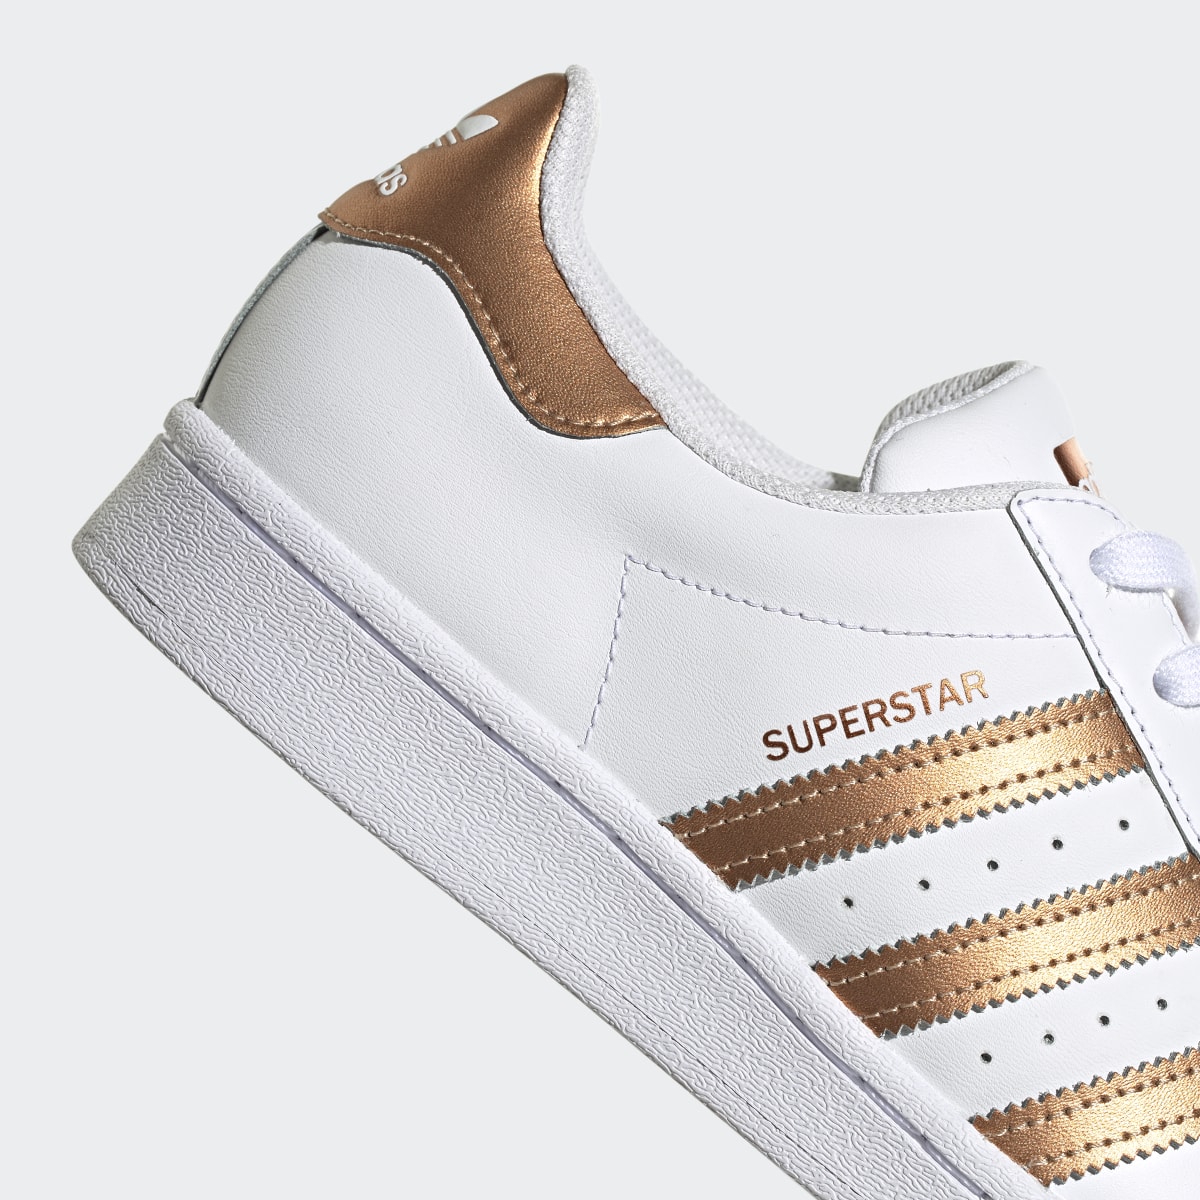 Adidas Superstar Shoes. 10